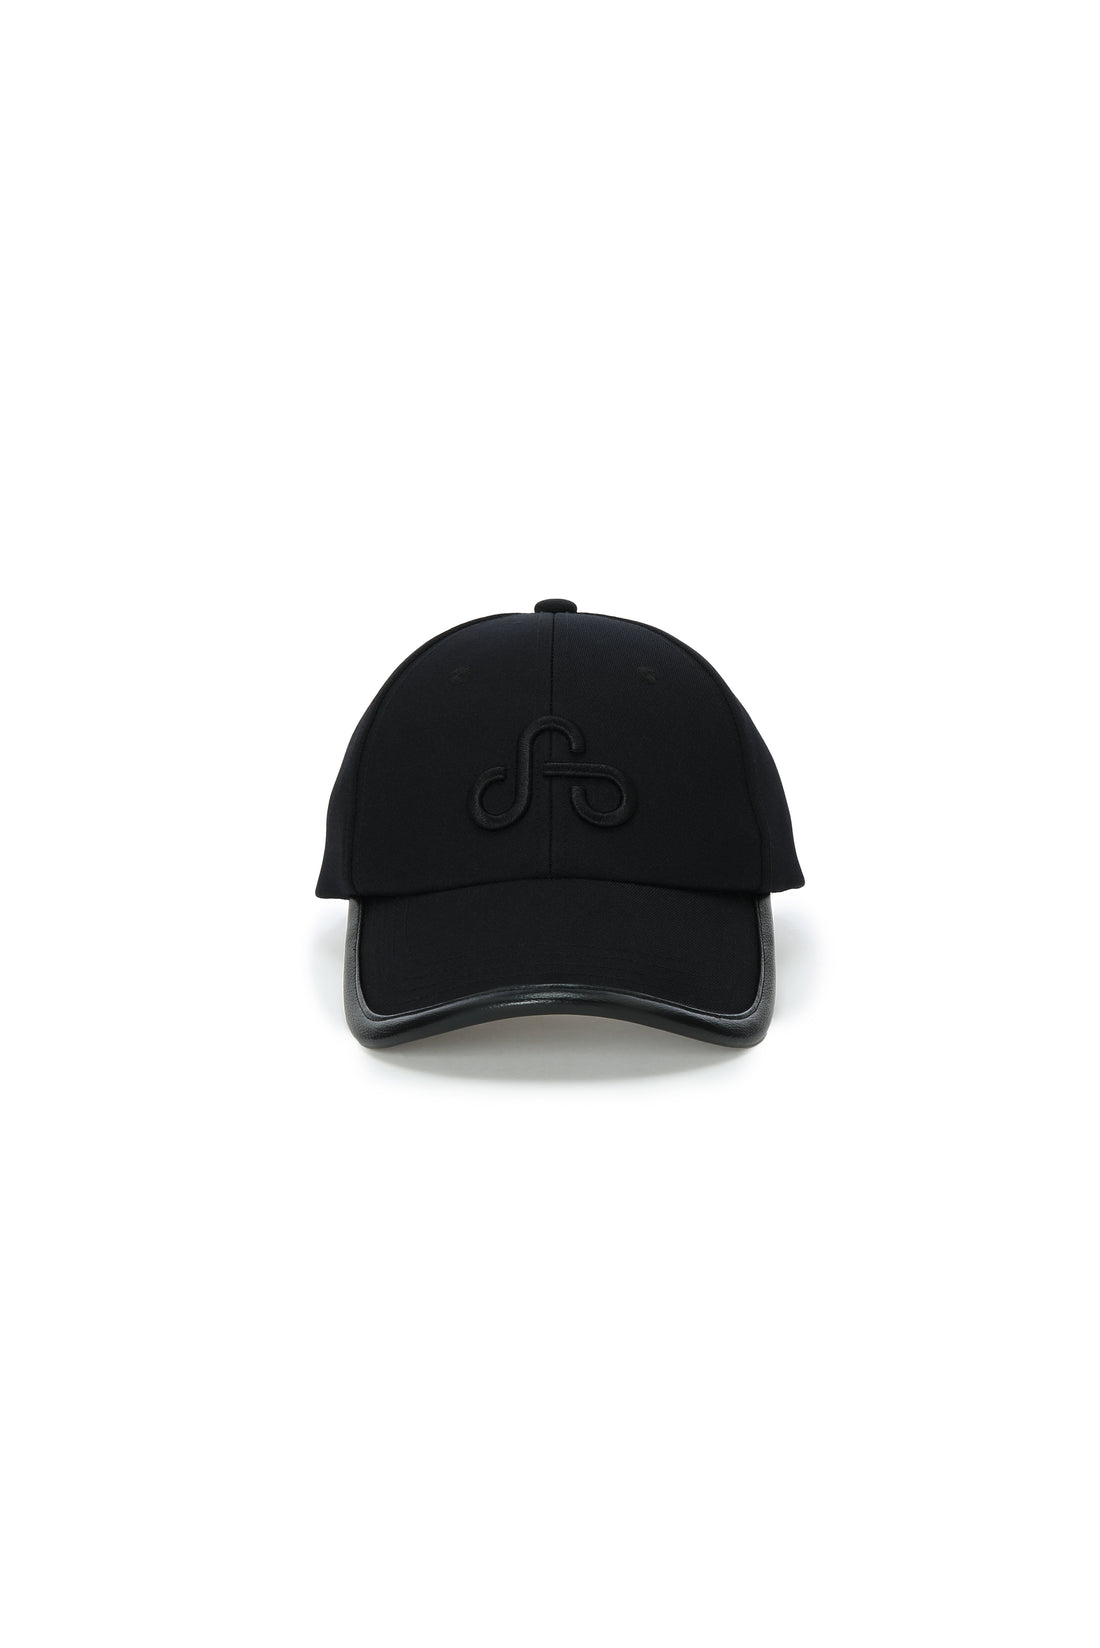 TRIMMED CAP (Black)